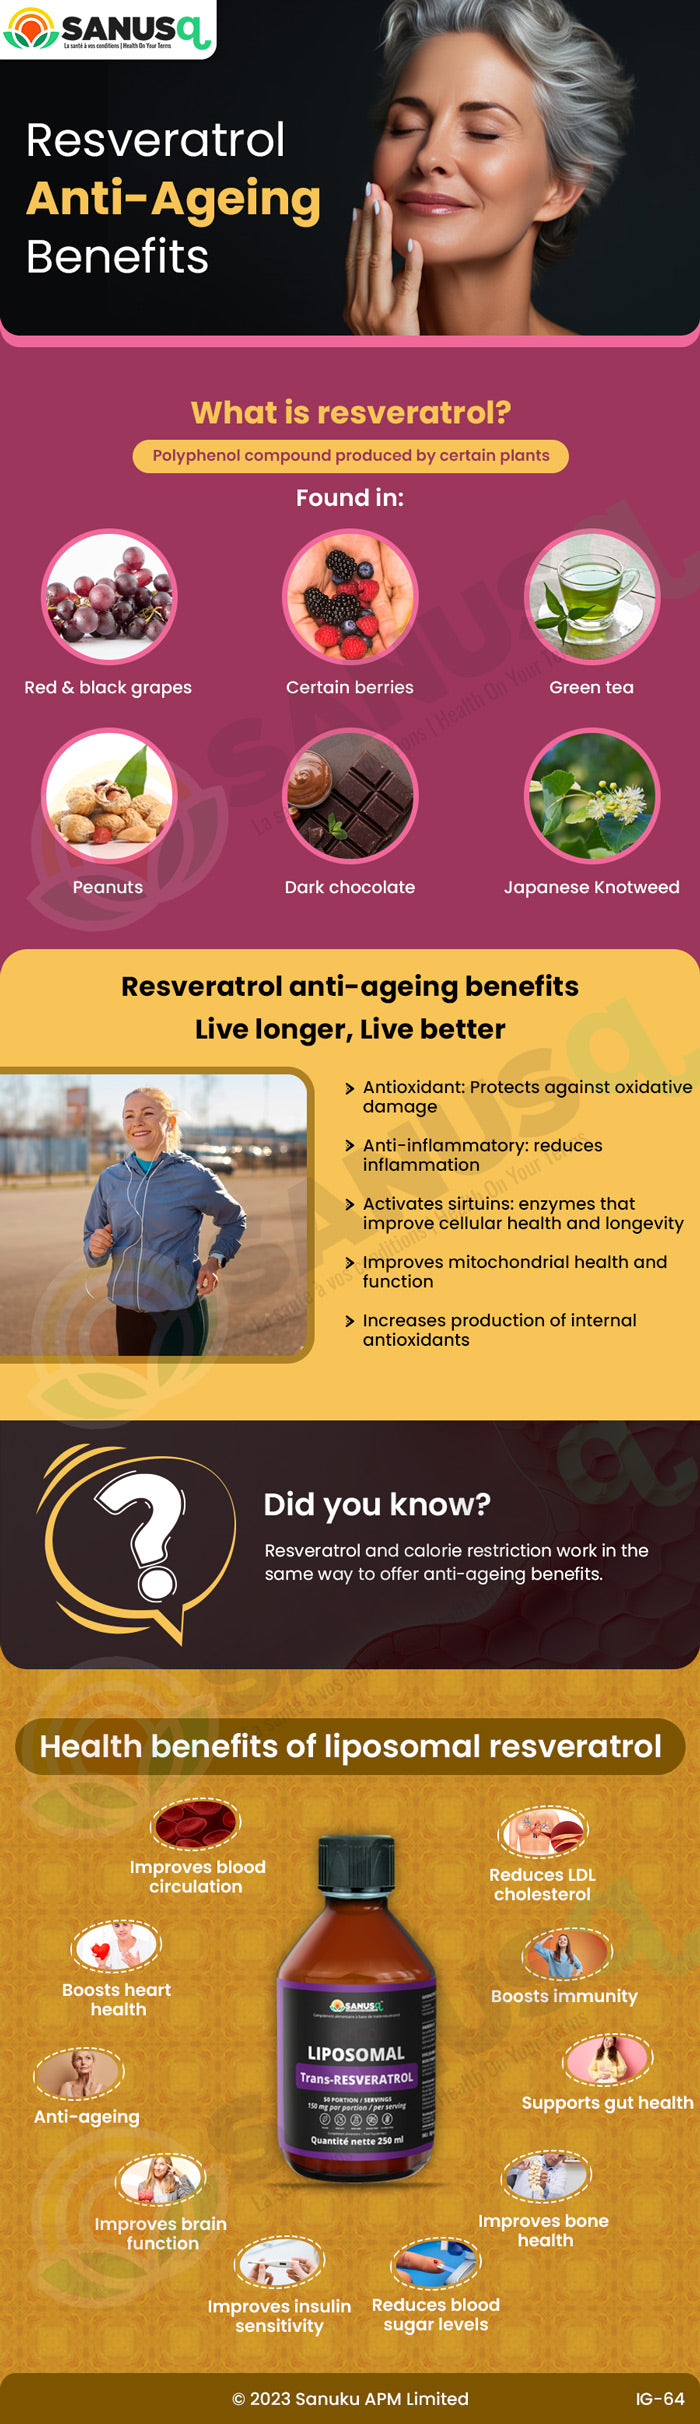 Anti-ageing benefits of Resveratrol